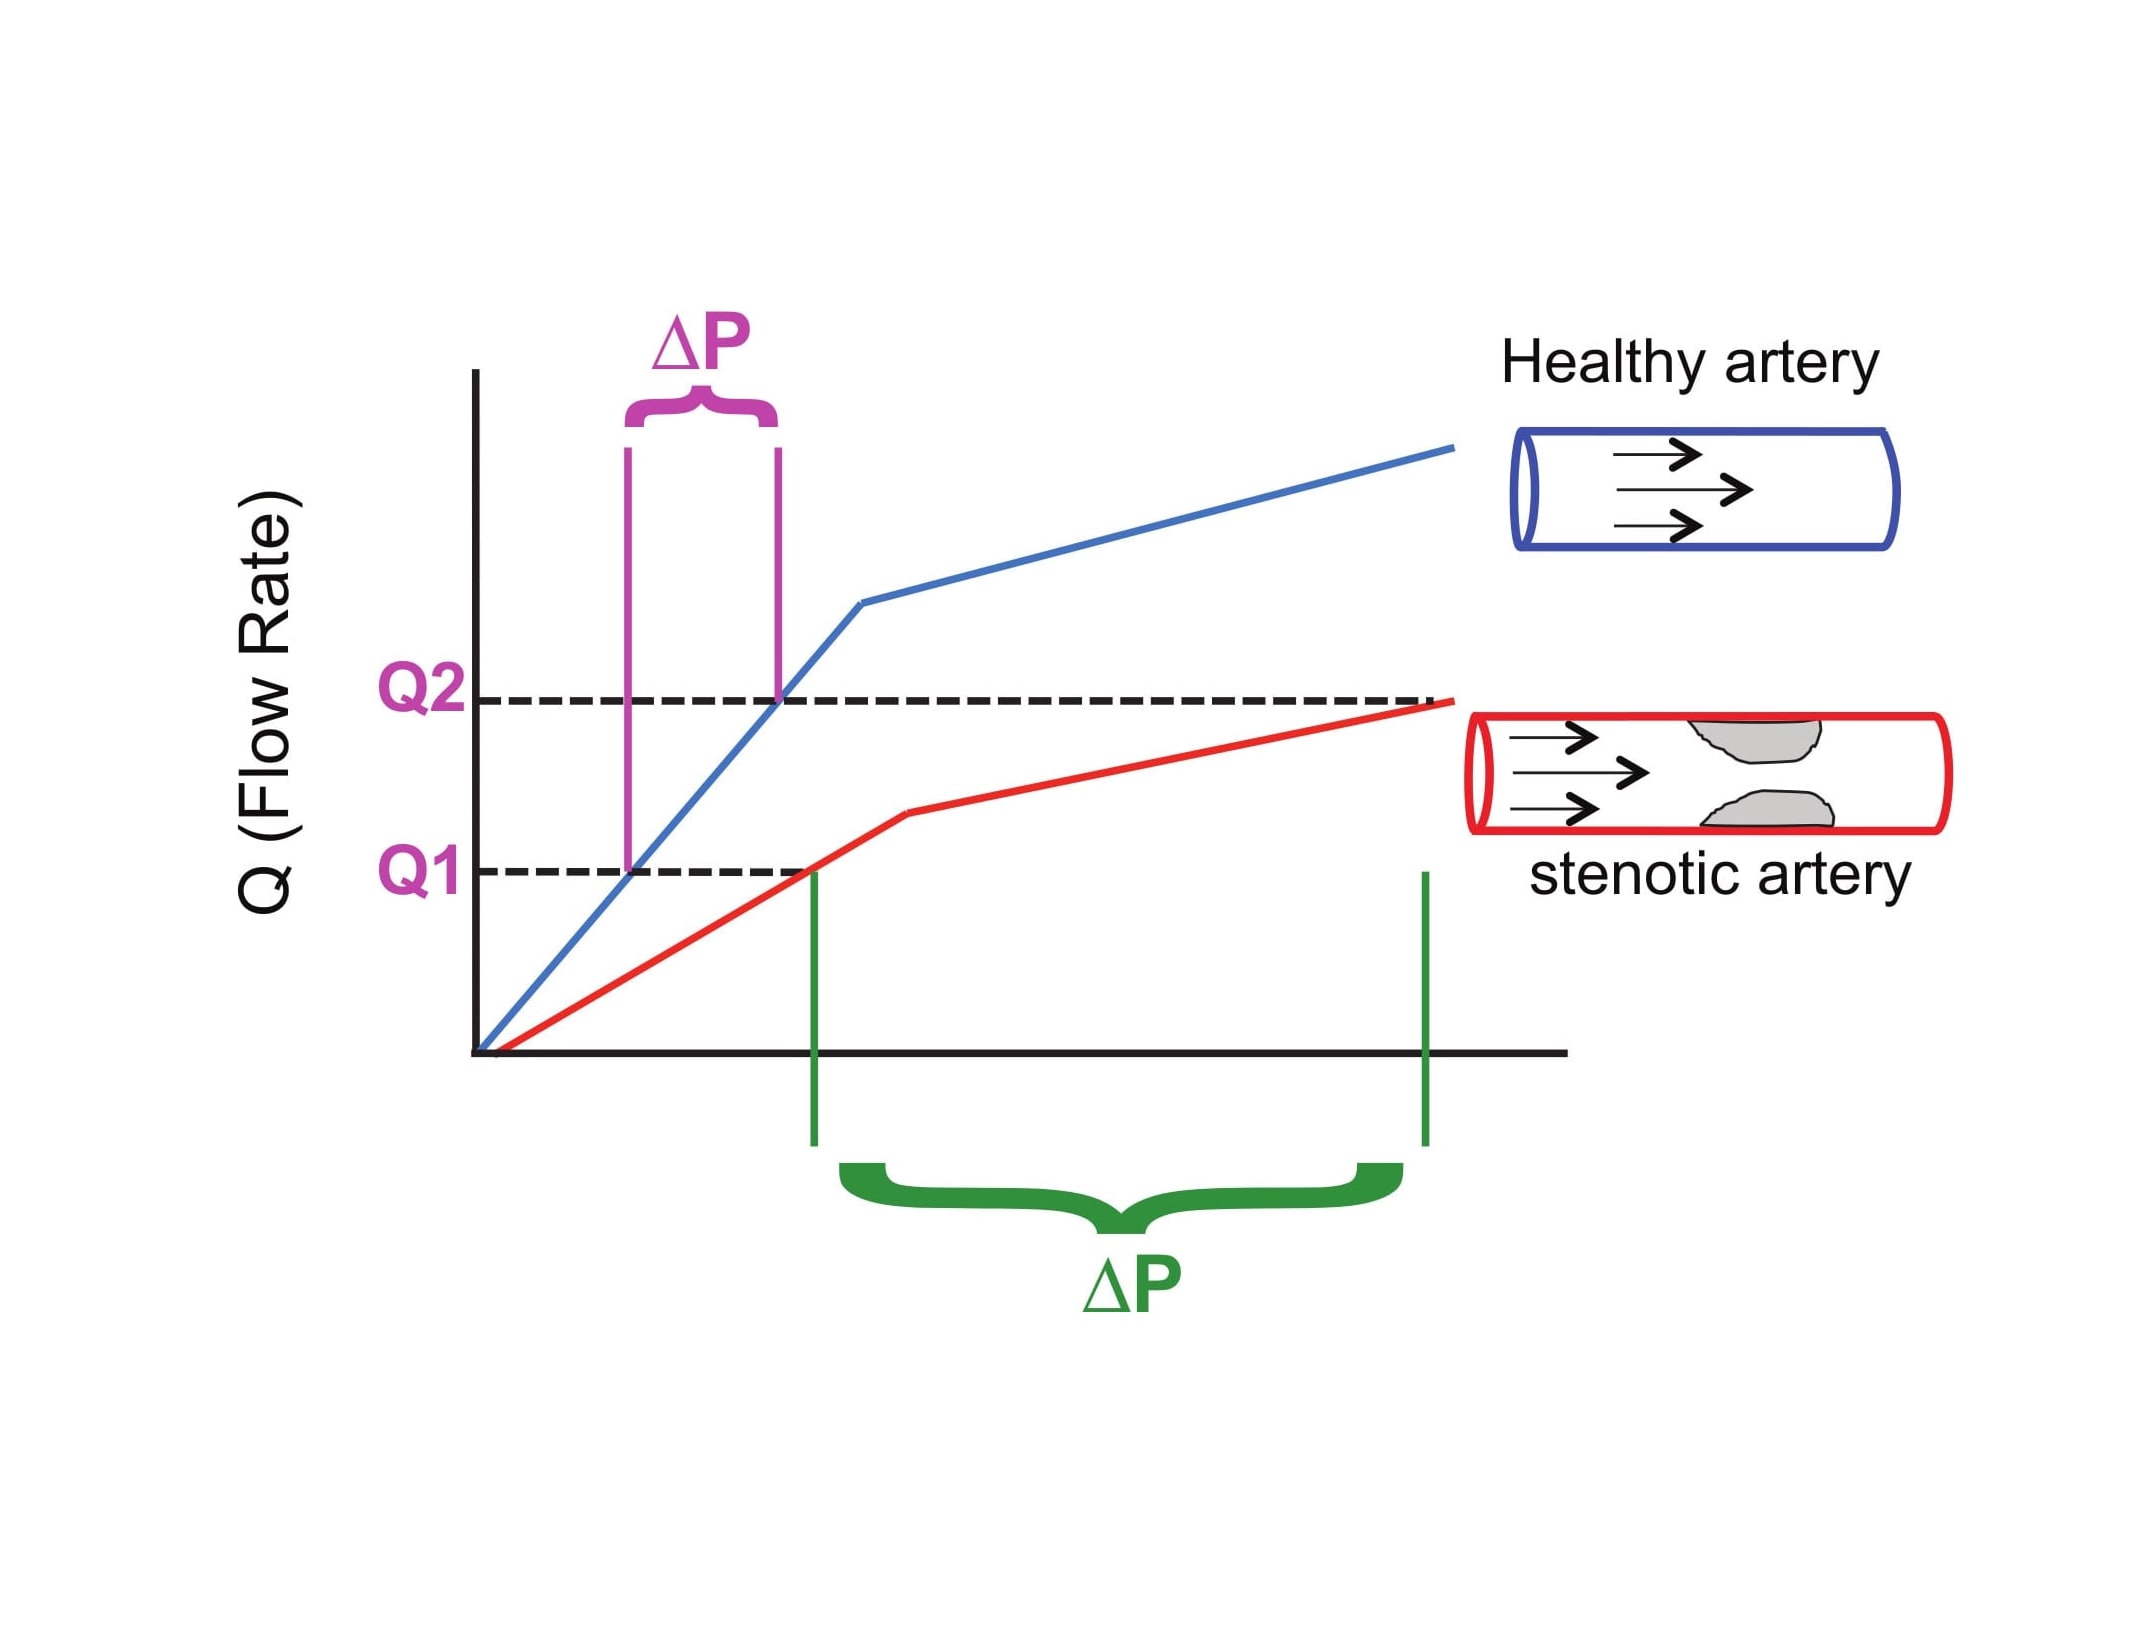 Stenotic artery pressure flow